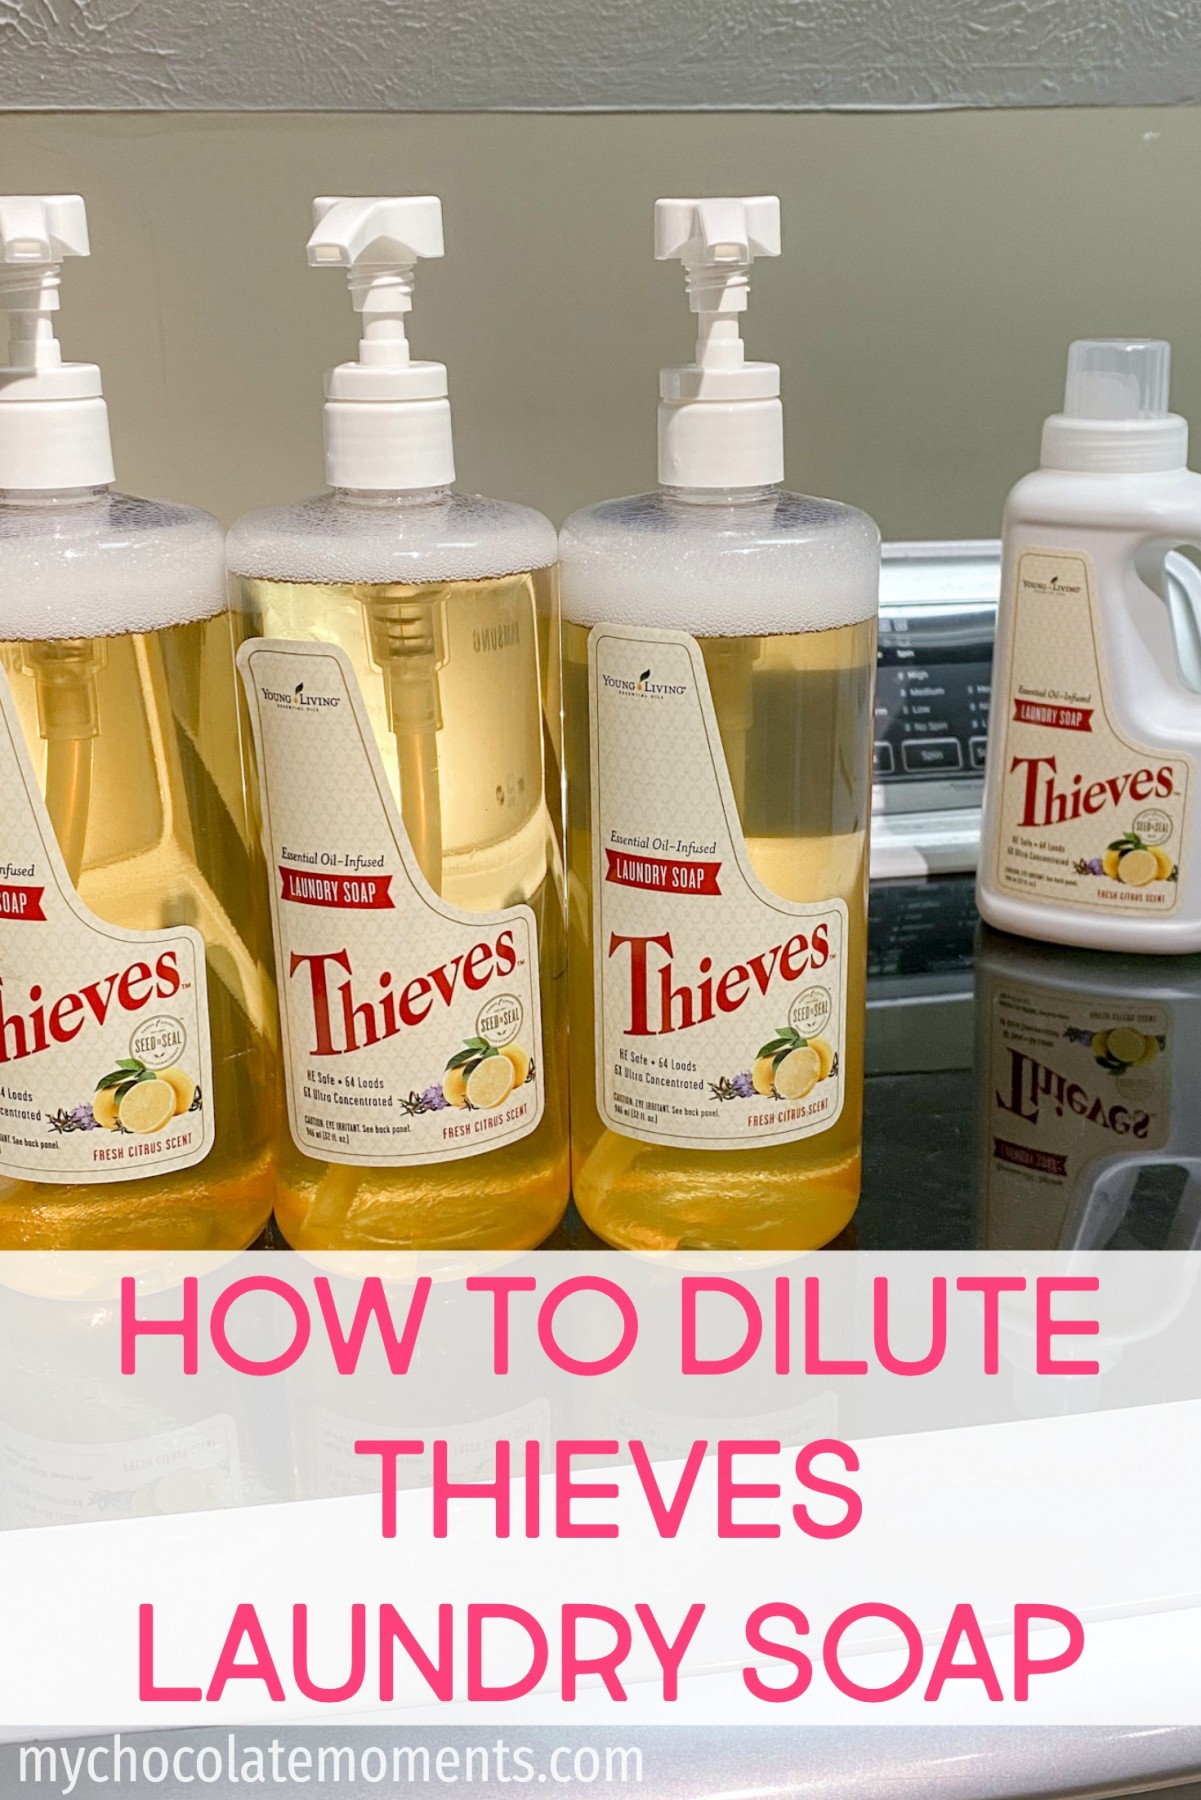 Thieves Oil Recipe